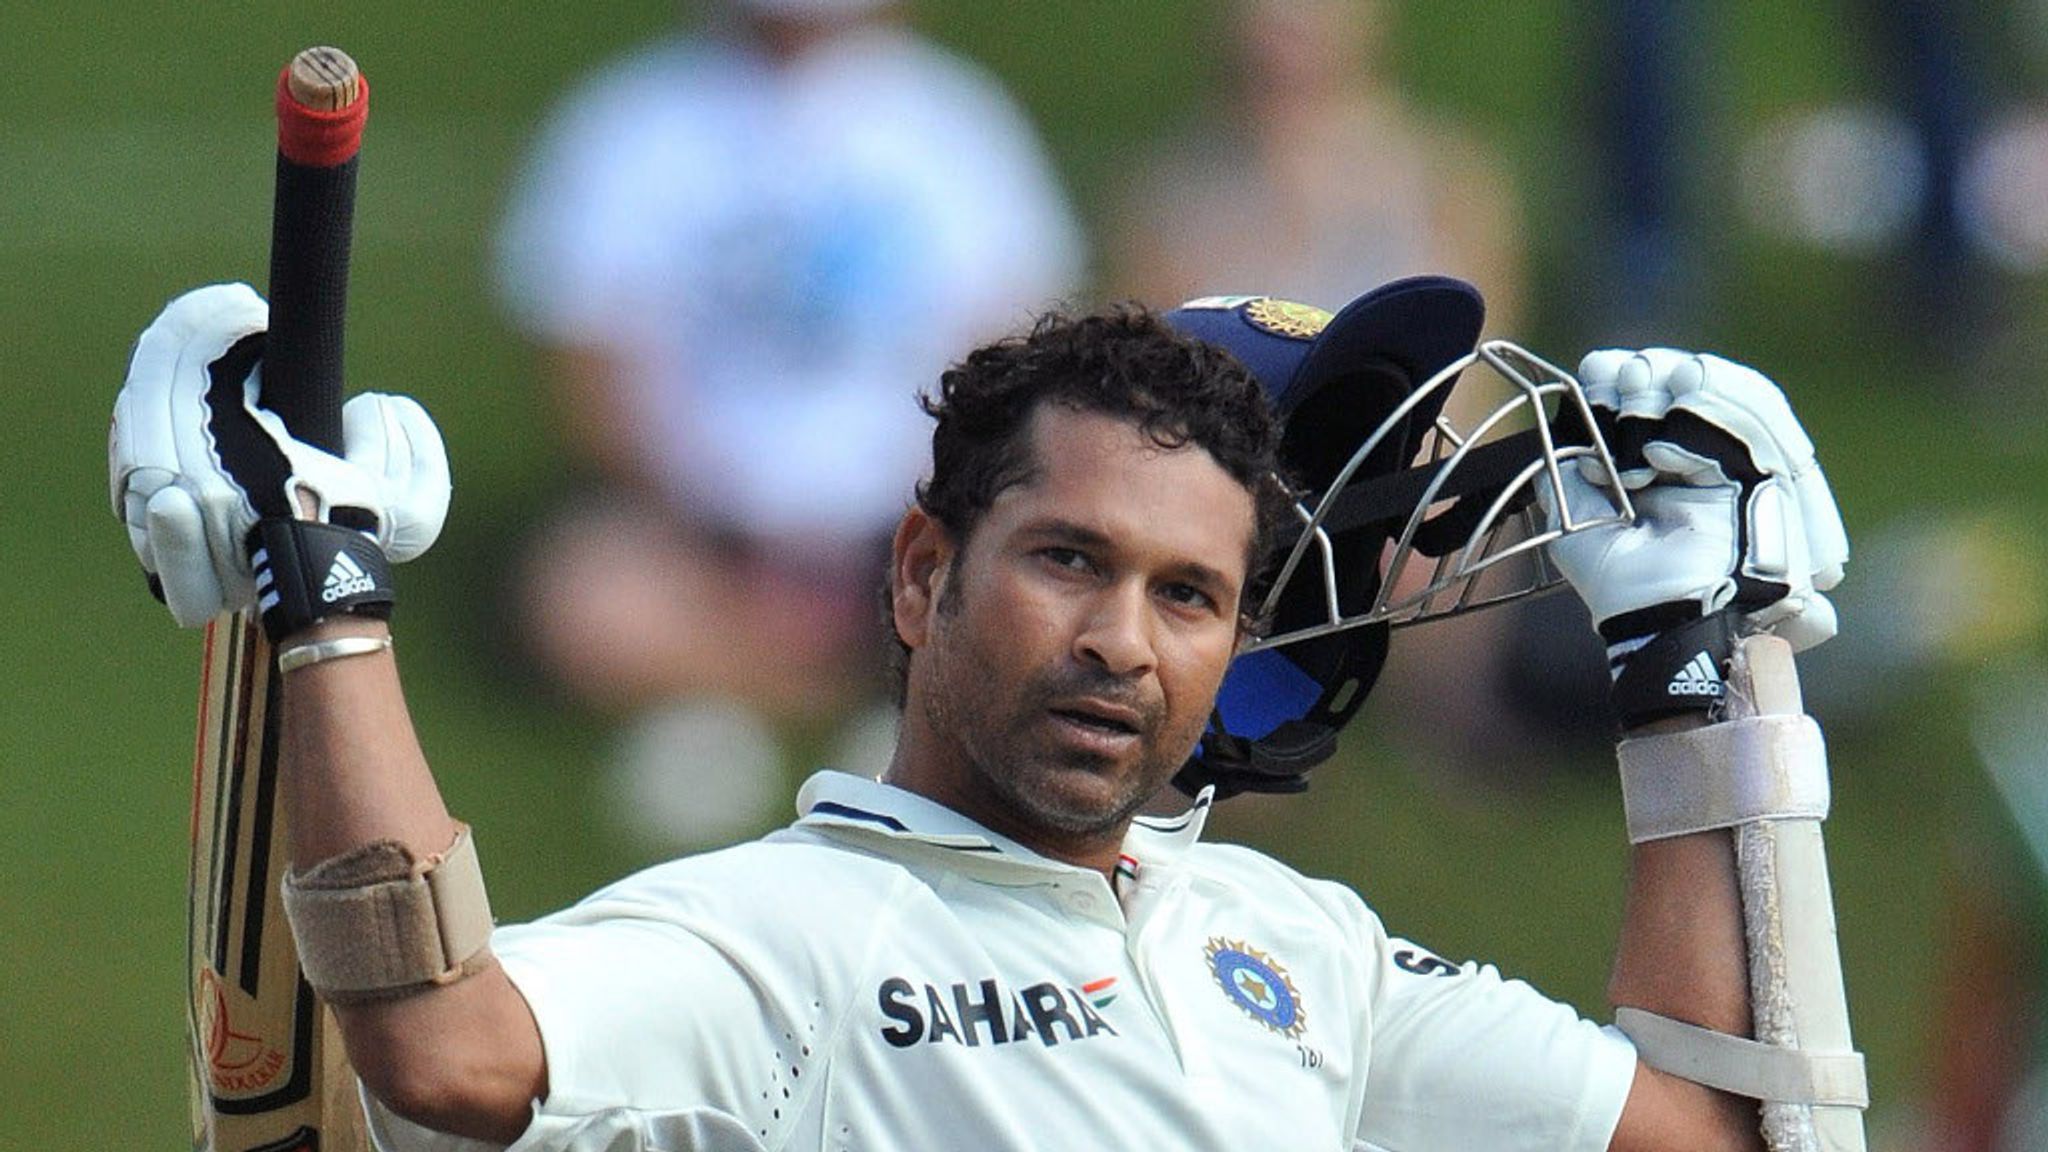 Sachin Tendulkar 9/2 with Sky Bet to score a century in final Test | Cricket News | Sky Sports